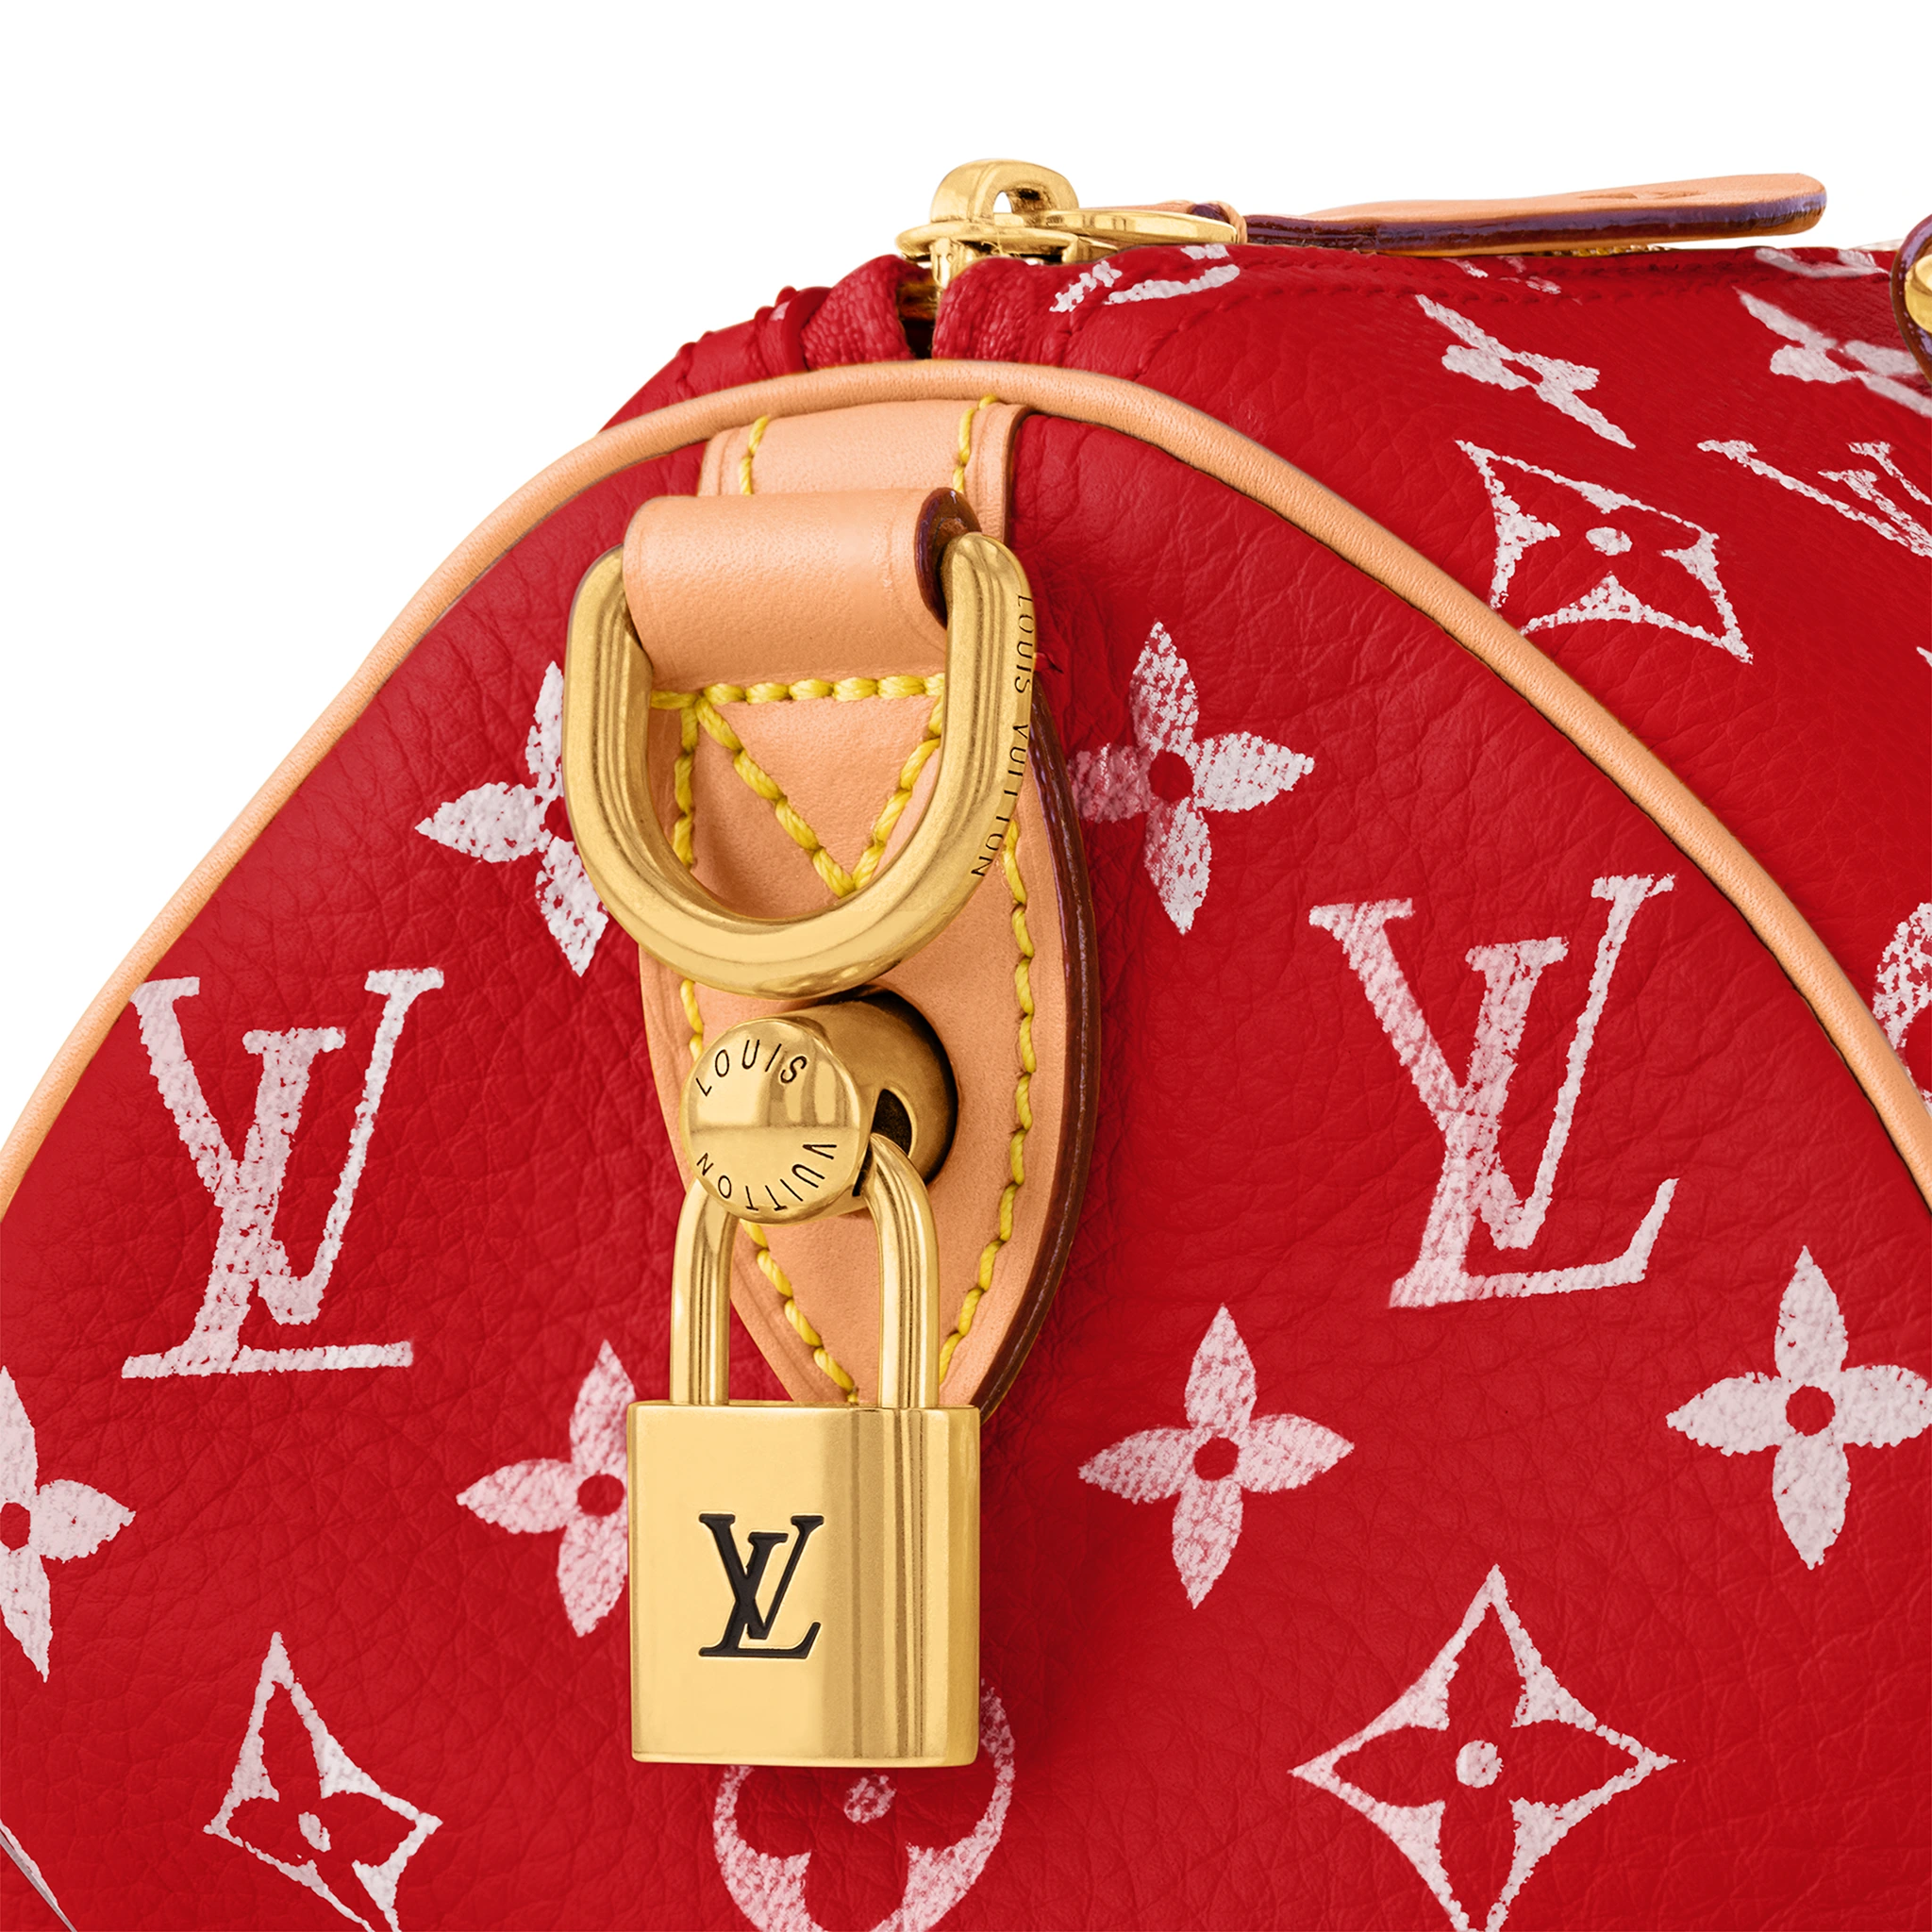 Detail view of Louis Vuitton Monogram Speedy P9 Red Bandoulière 25 NVPROD4900031V